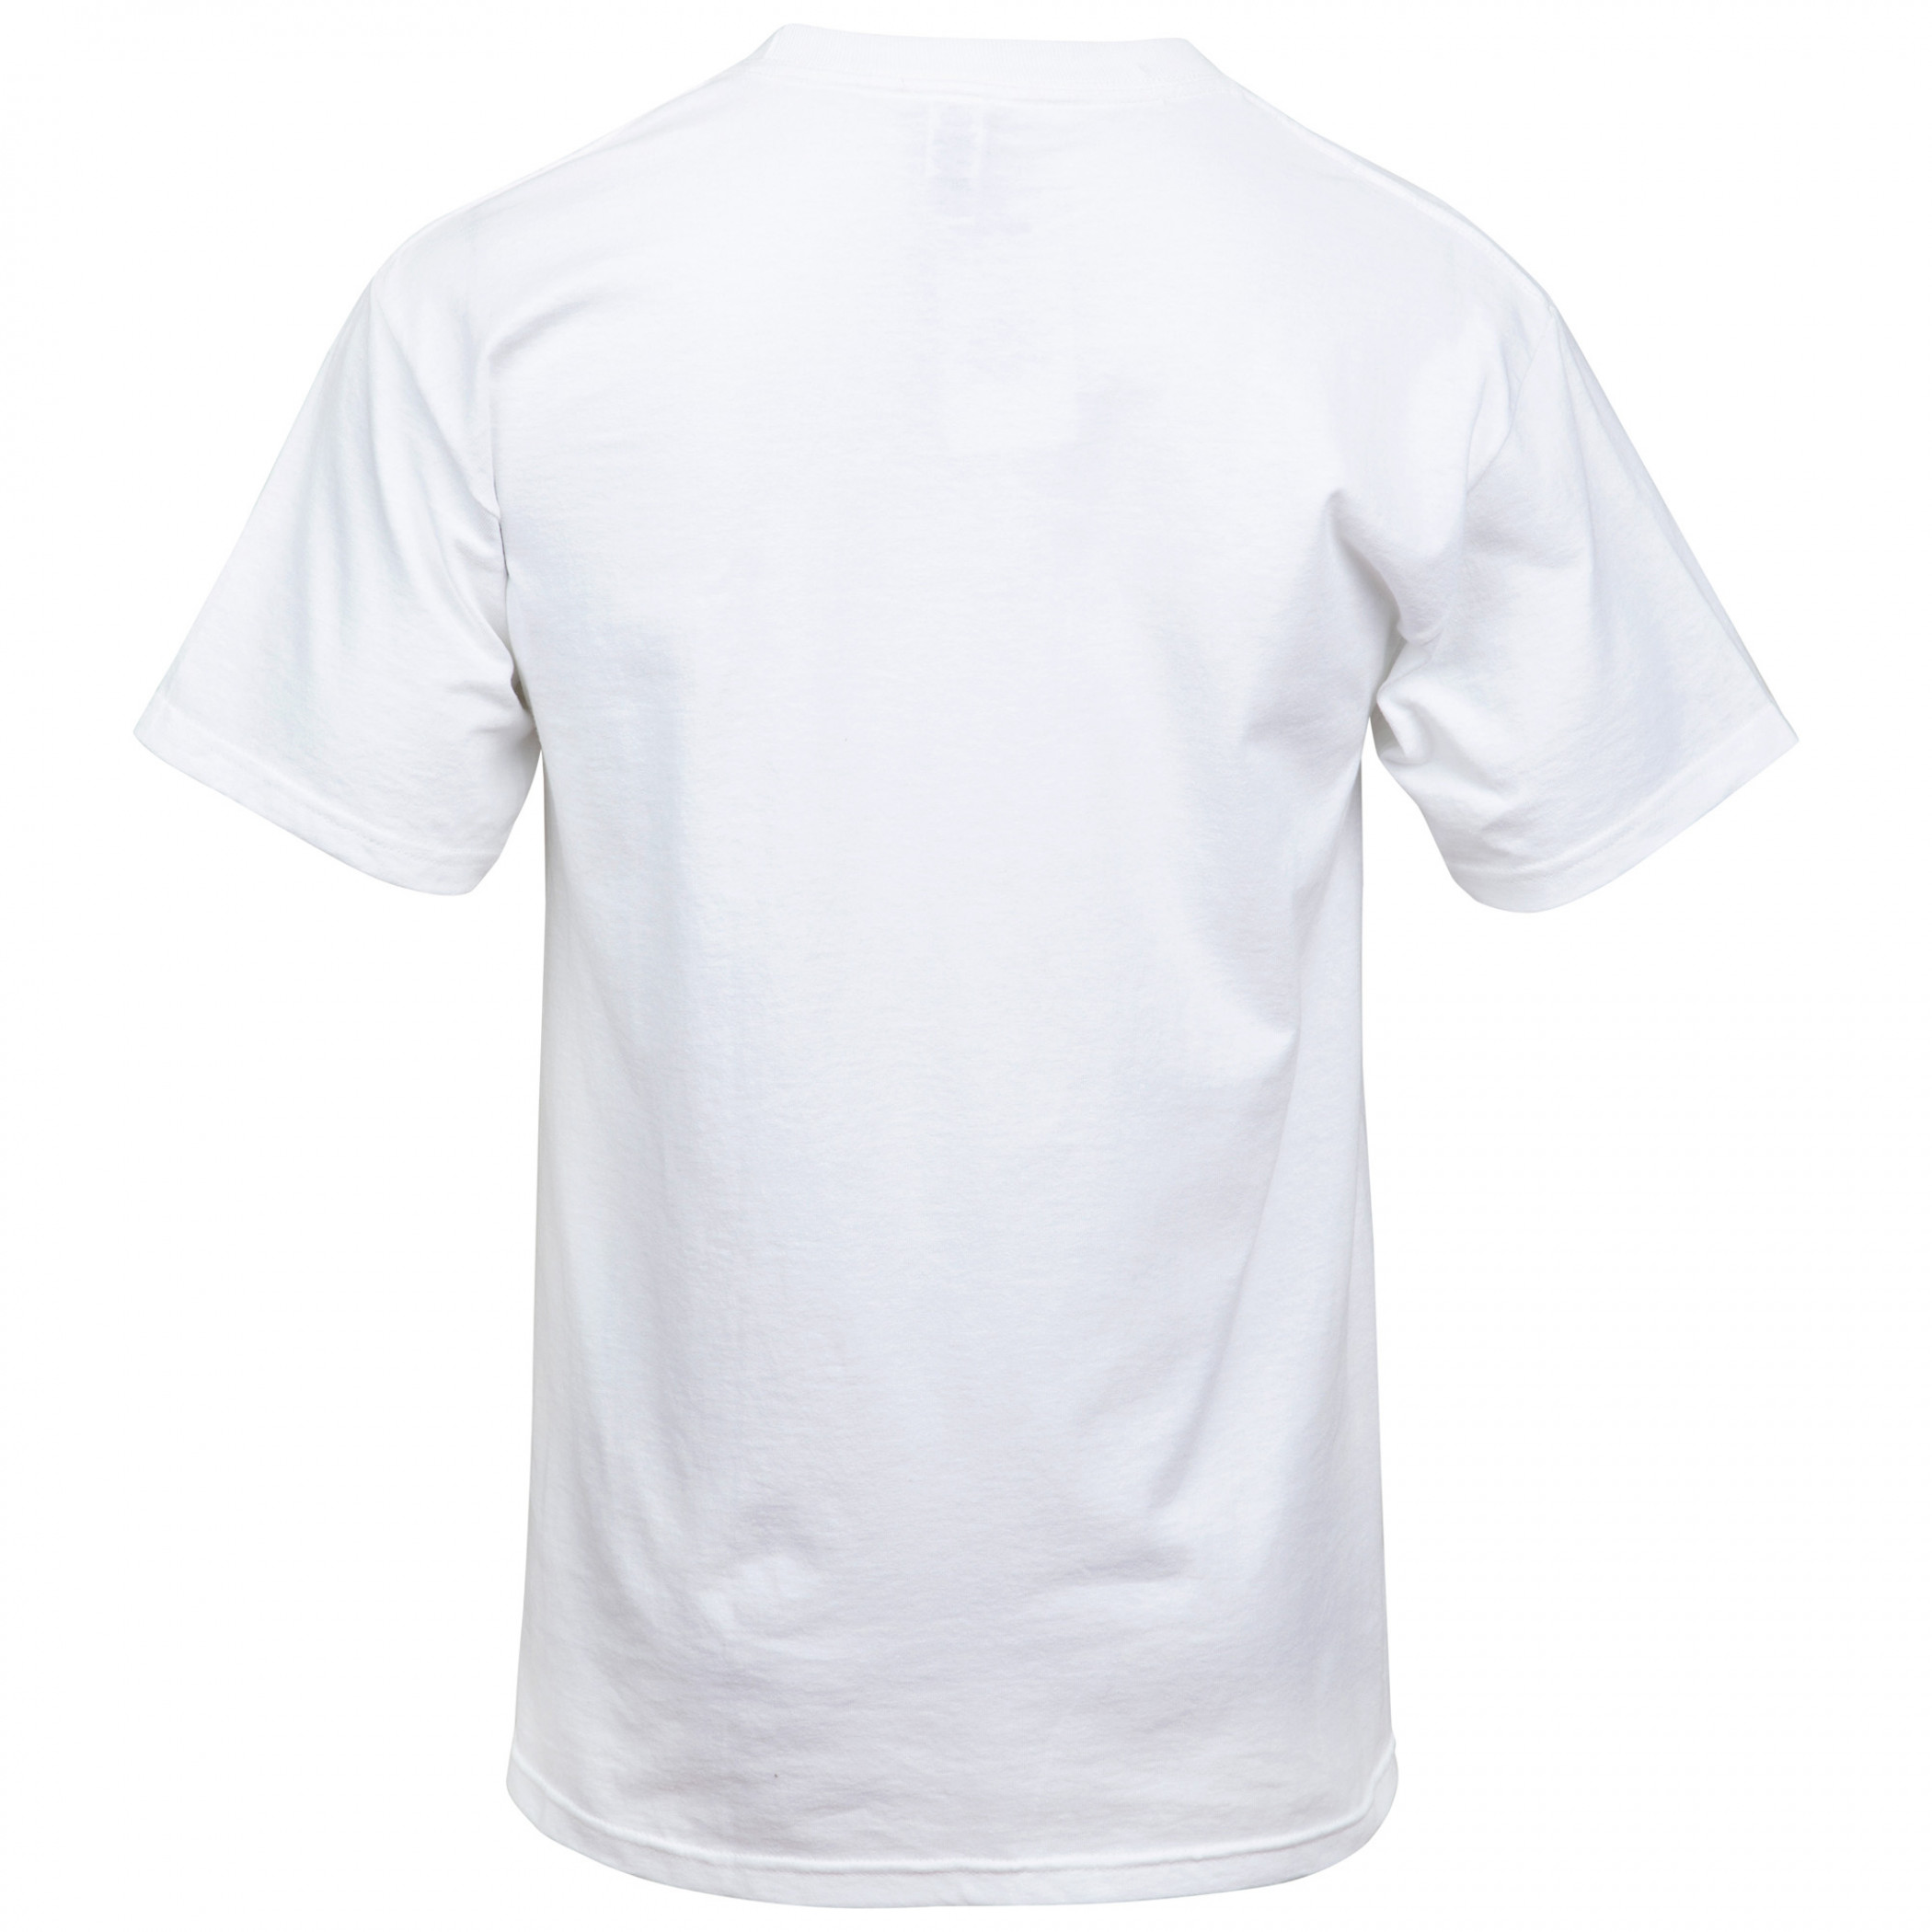 Corona Label White T-Shirt